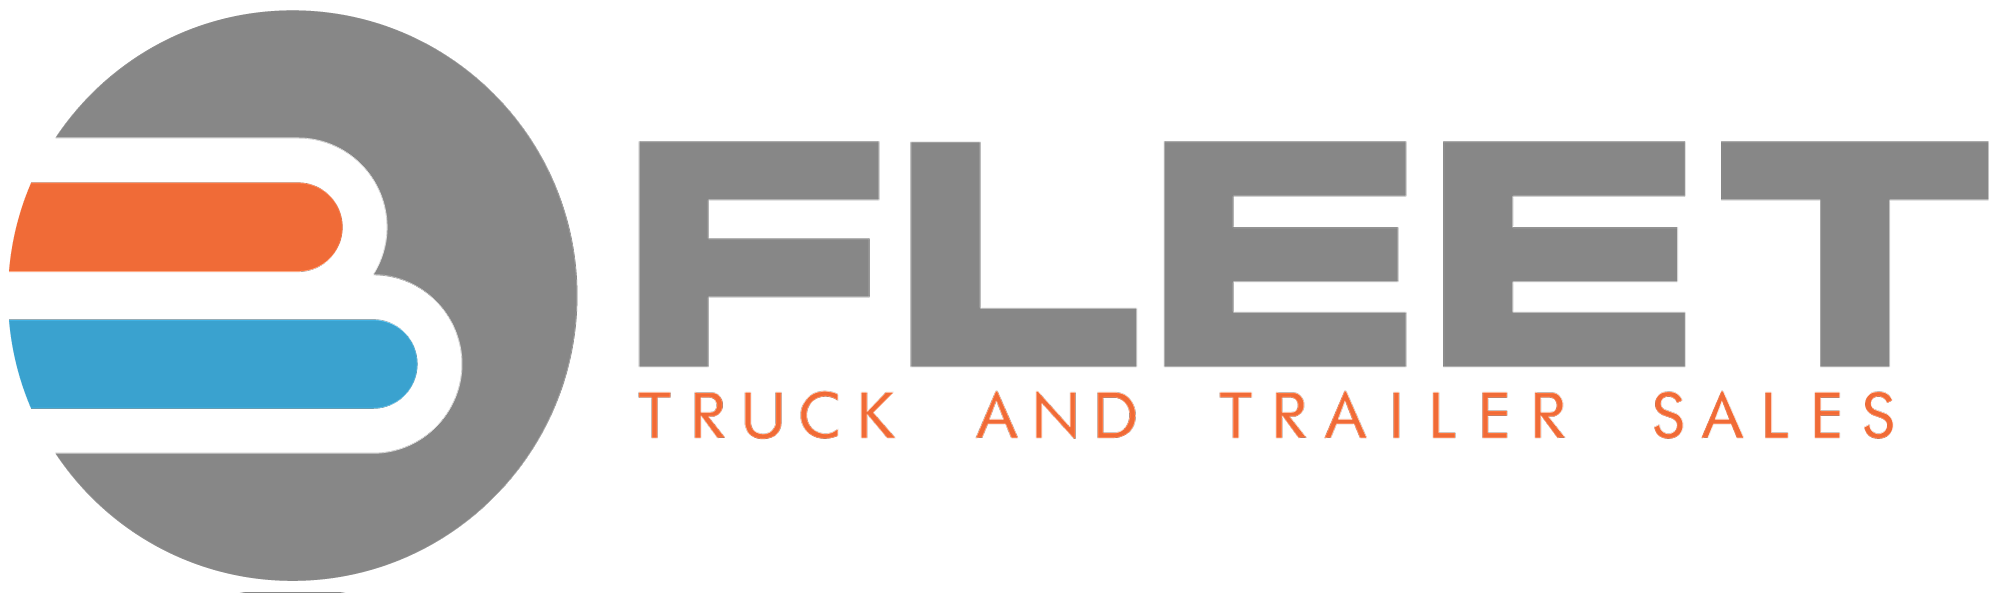 Fleet Truck and trailer sales fleet-logo-1 Contact us  